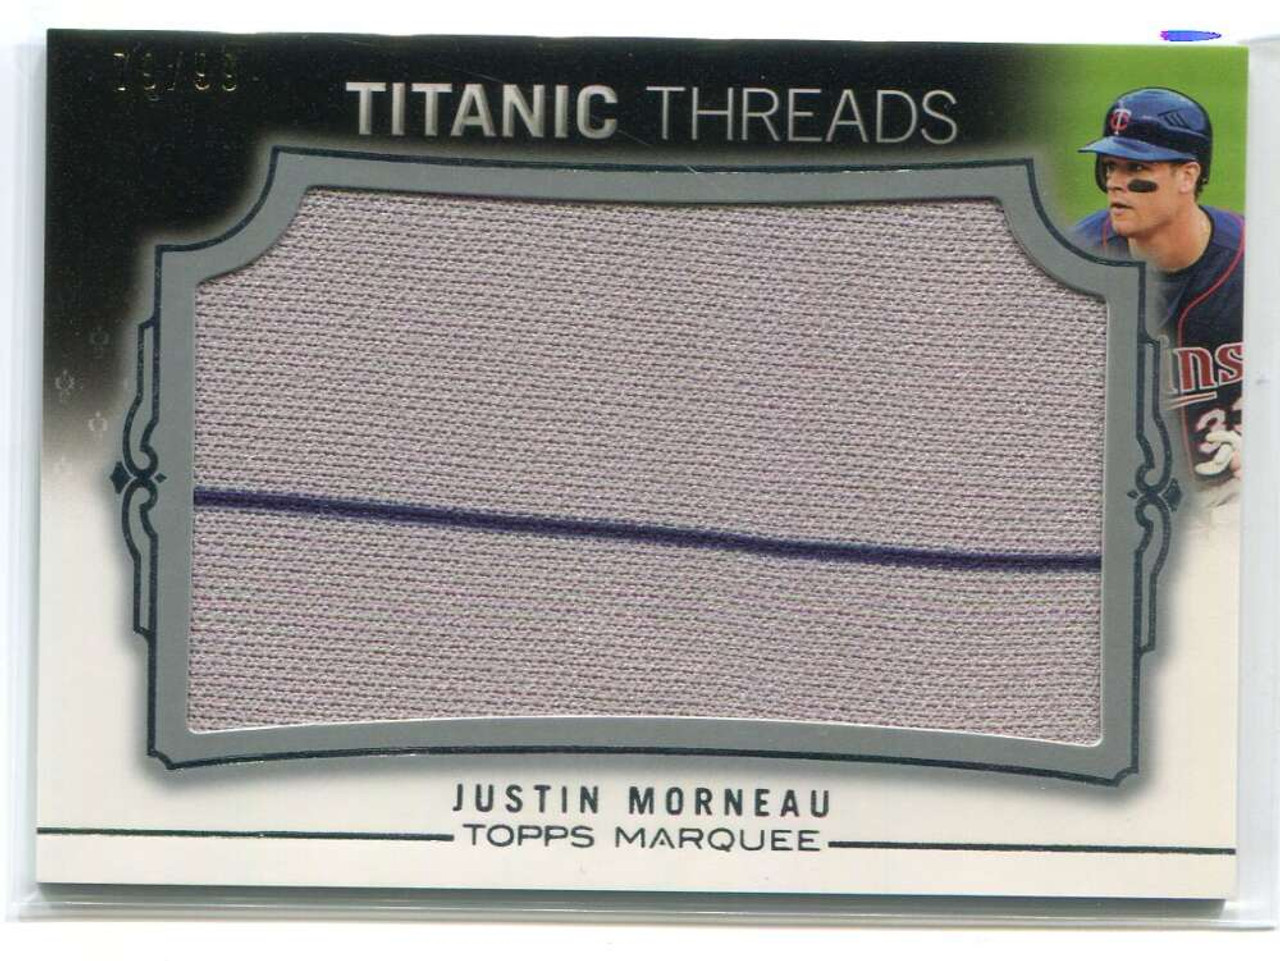 2011 Topps Marquee Titanic Threads ttjr98 Justin Morneau Jumbo